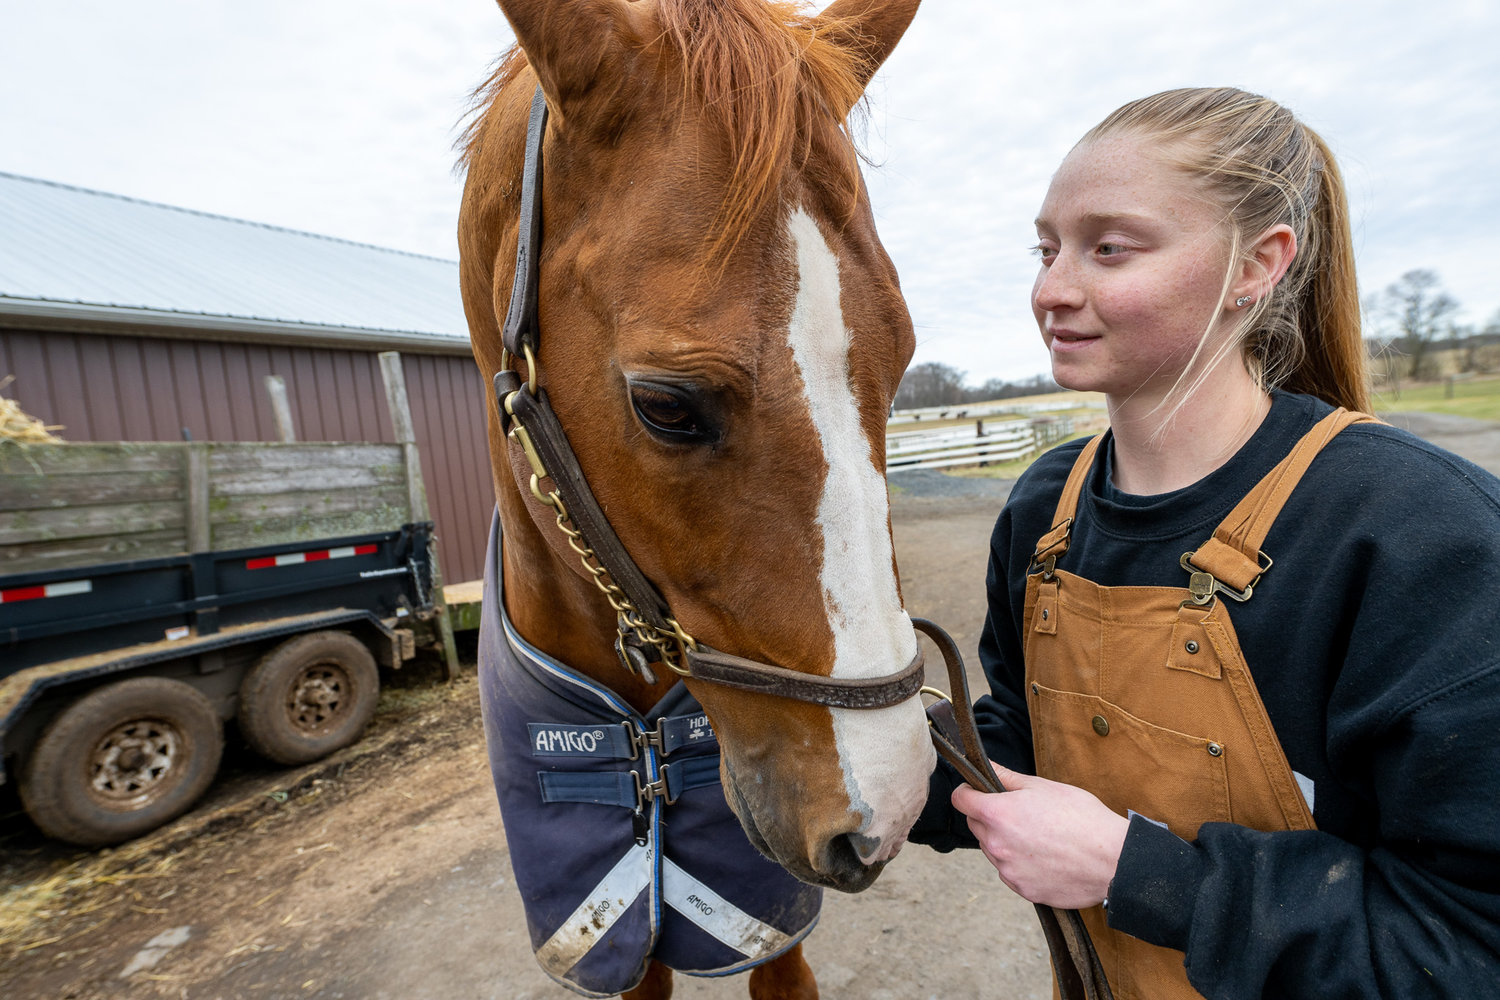 Sierra Ripka, an animal science major, cares for horses from the breeding center at Delaware Valley University.